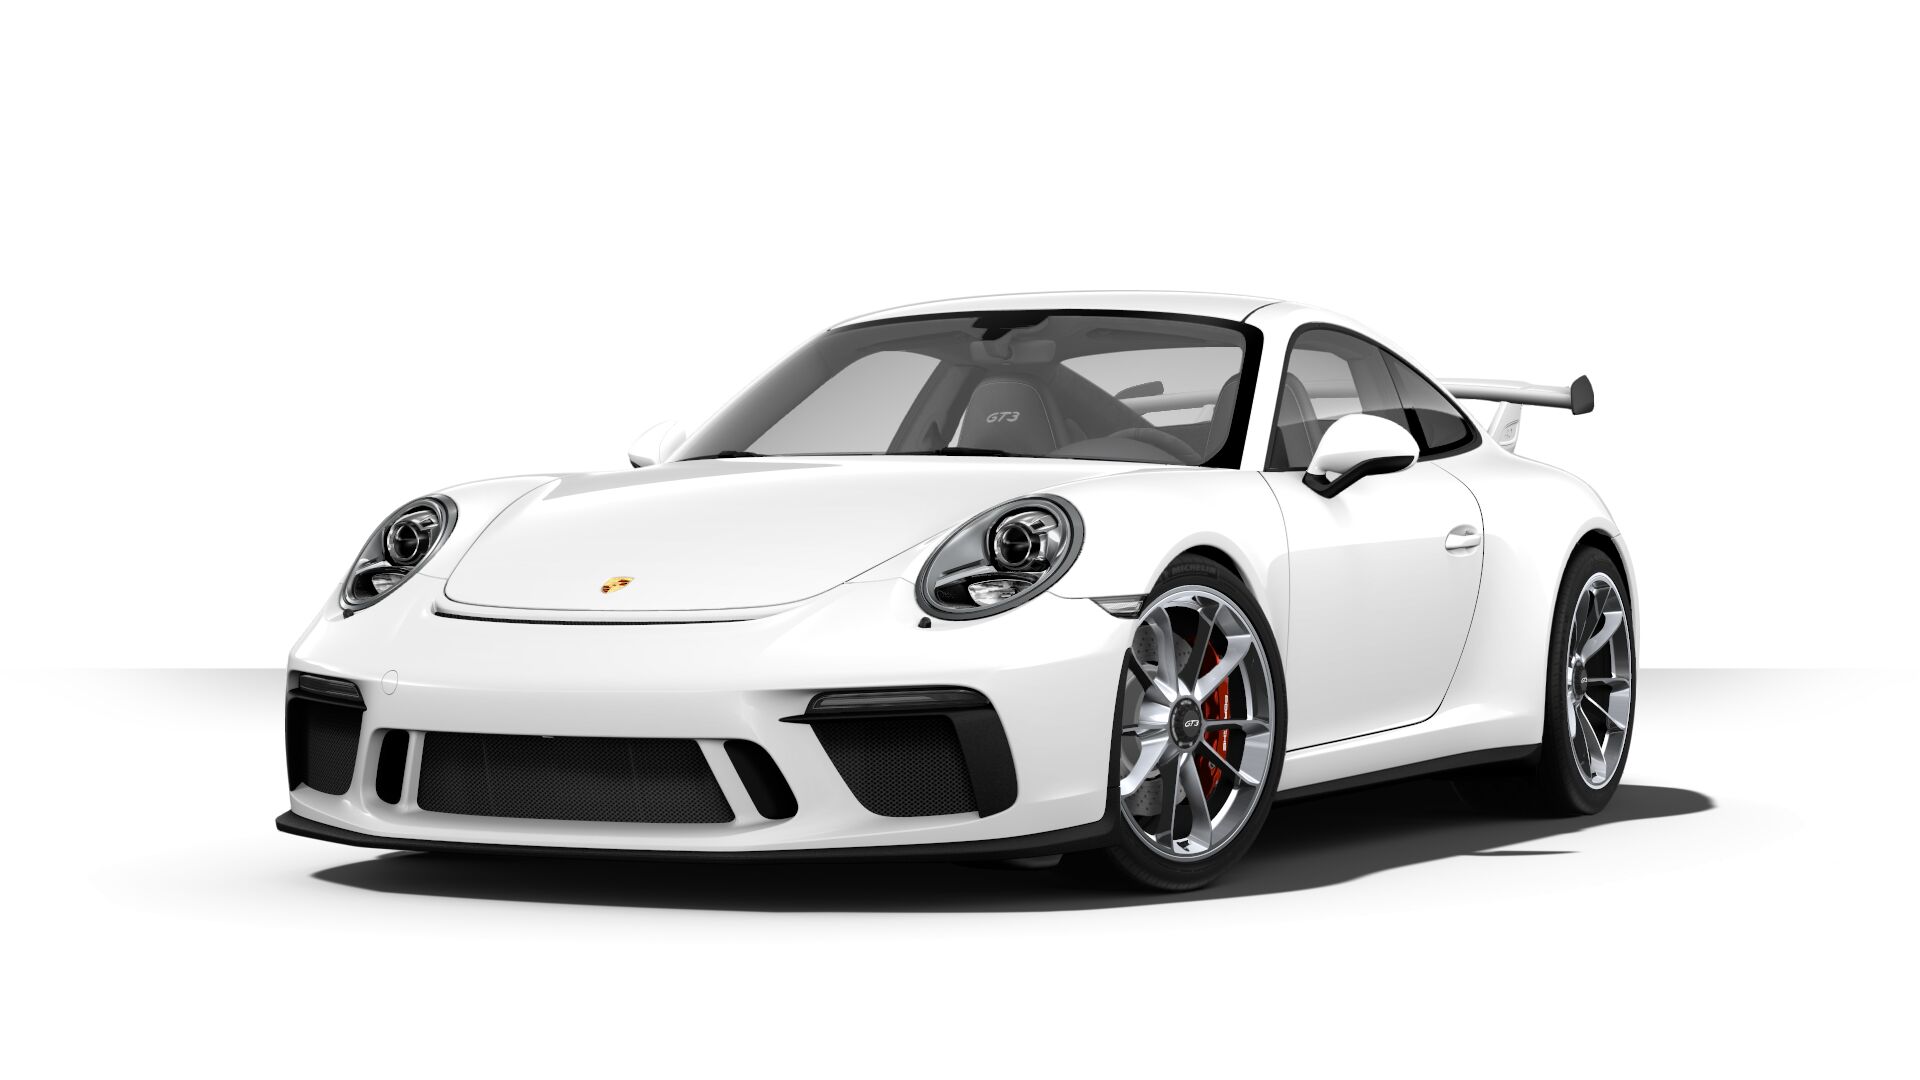 Design of the 2018 Porsche 911 GT3